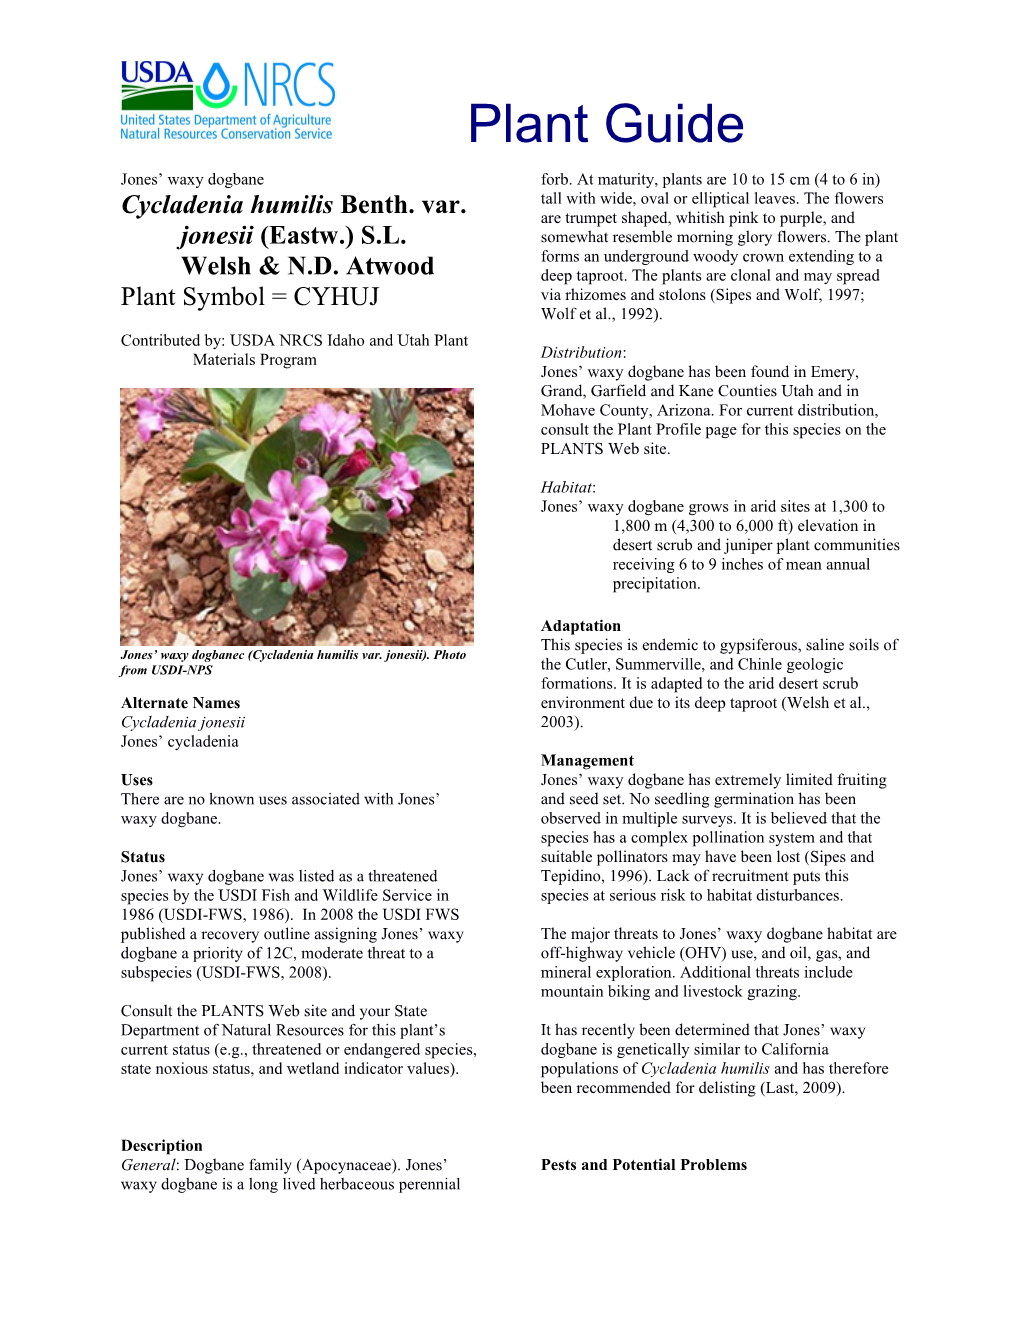 Plant Guide for Jones' Waxy Dogbane (Cycladenia Humilis Var. Jonesii)